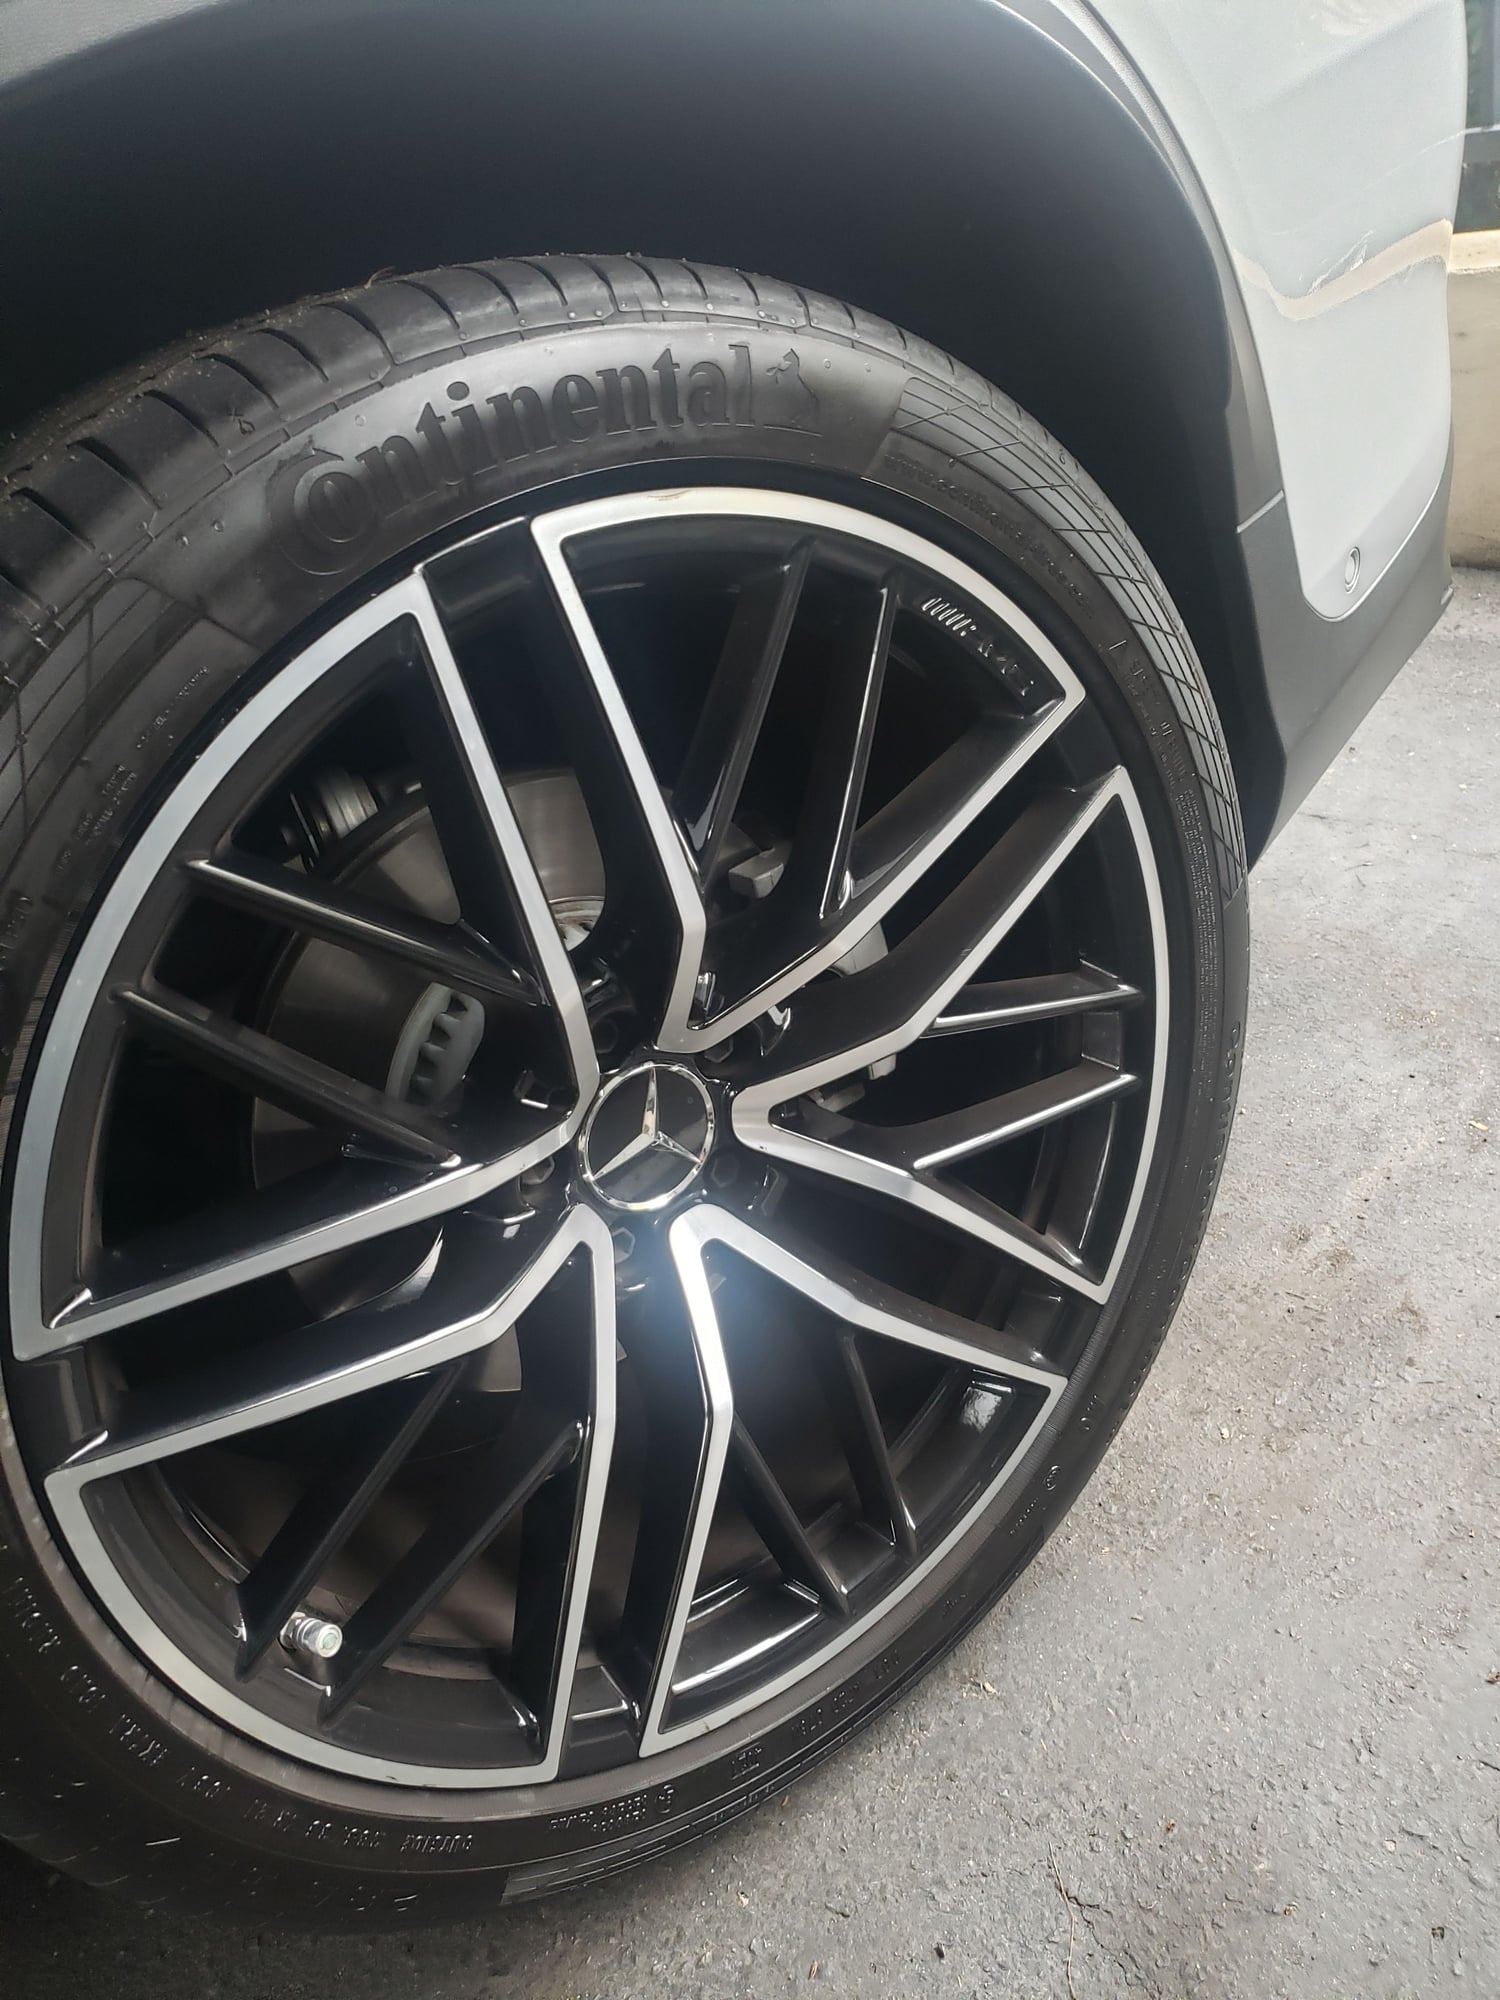 Wheels and Tires/Axles - WTT: my GLC 43 21" wheels for your GLC 43 20" wheels - Used - 2017 to 2023 Mercedes-Benz GLC43 AMG - San Diego, CA 92105, United States